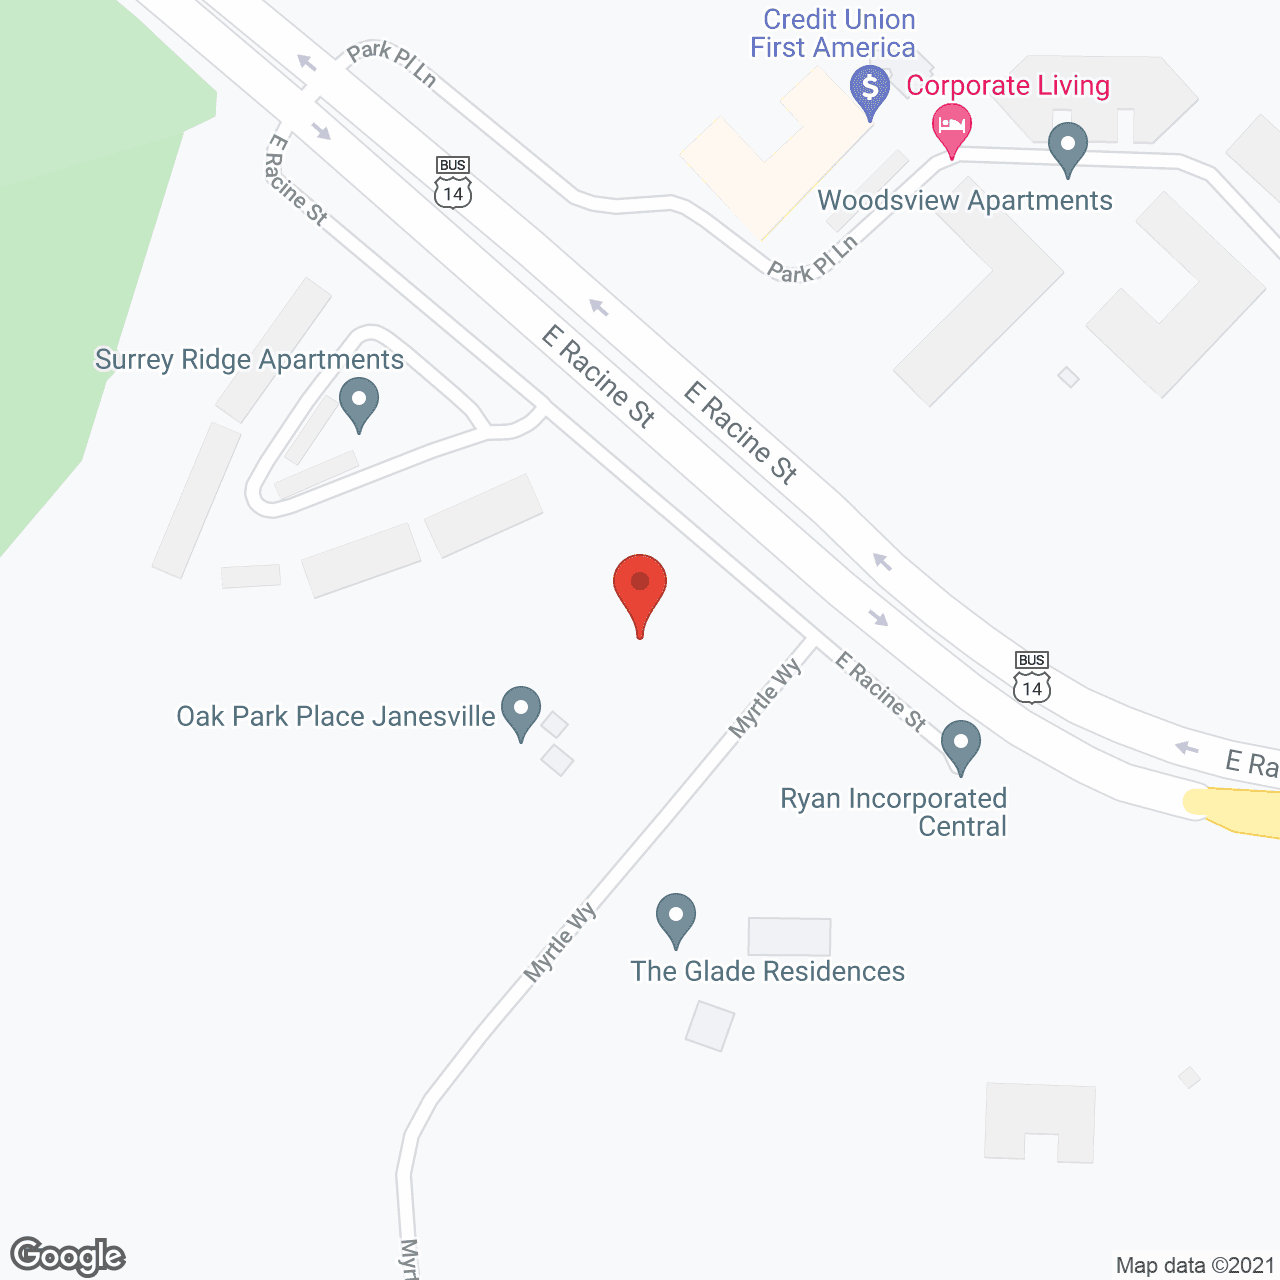 Oak Park Place Janesville in google map